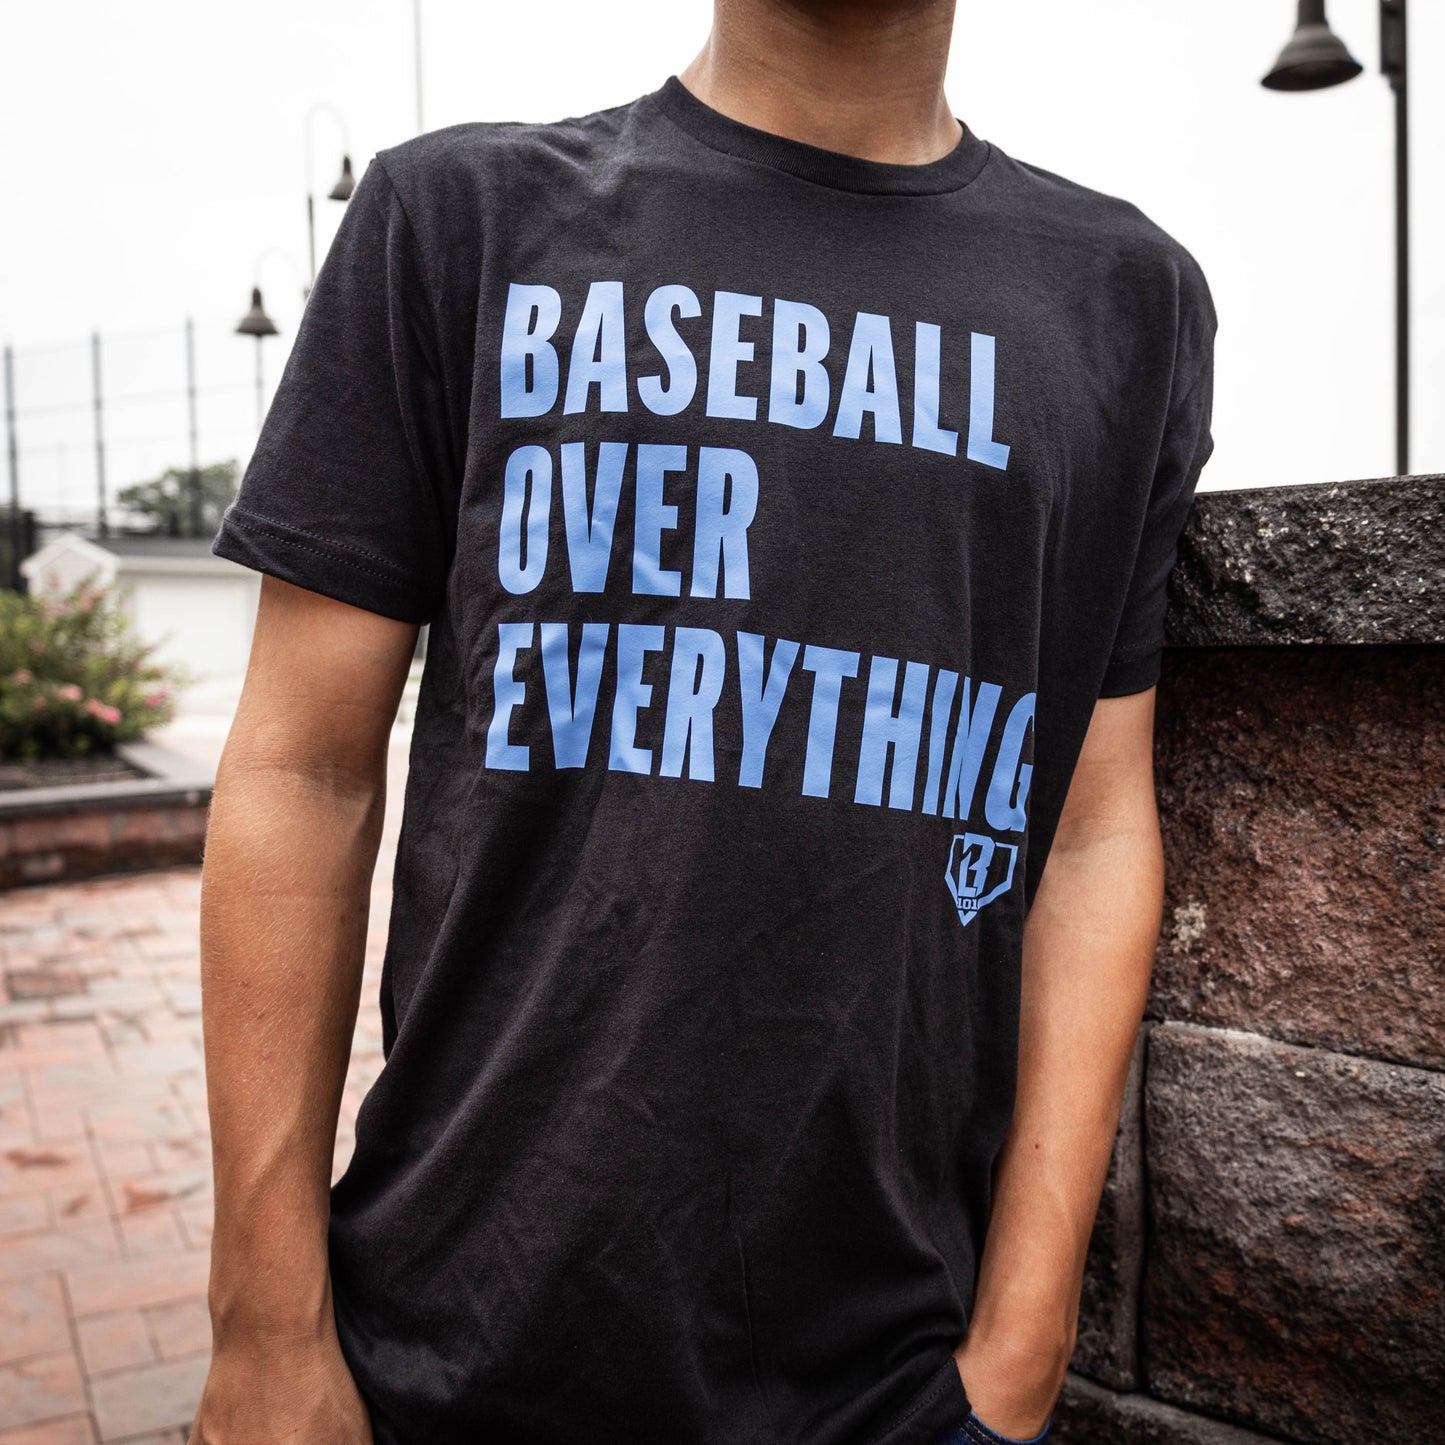 Baseball Over Everything Tee - Black/Blue